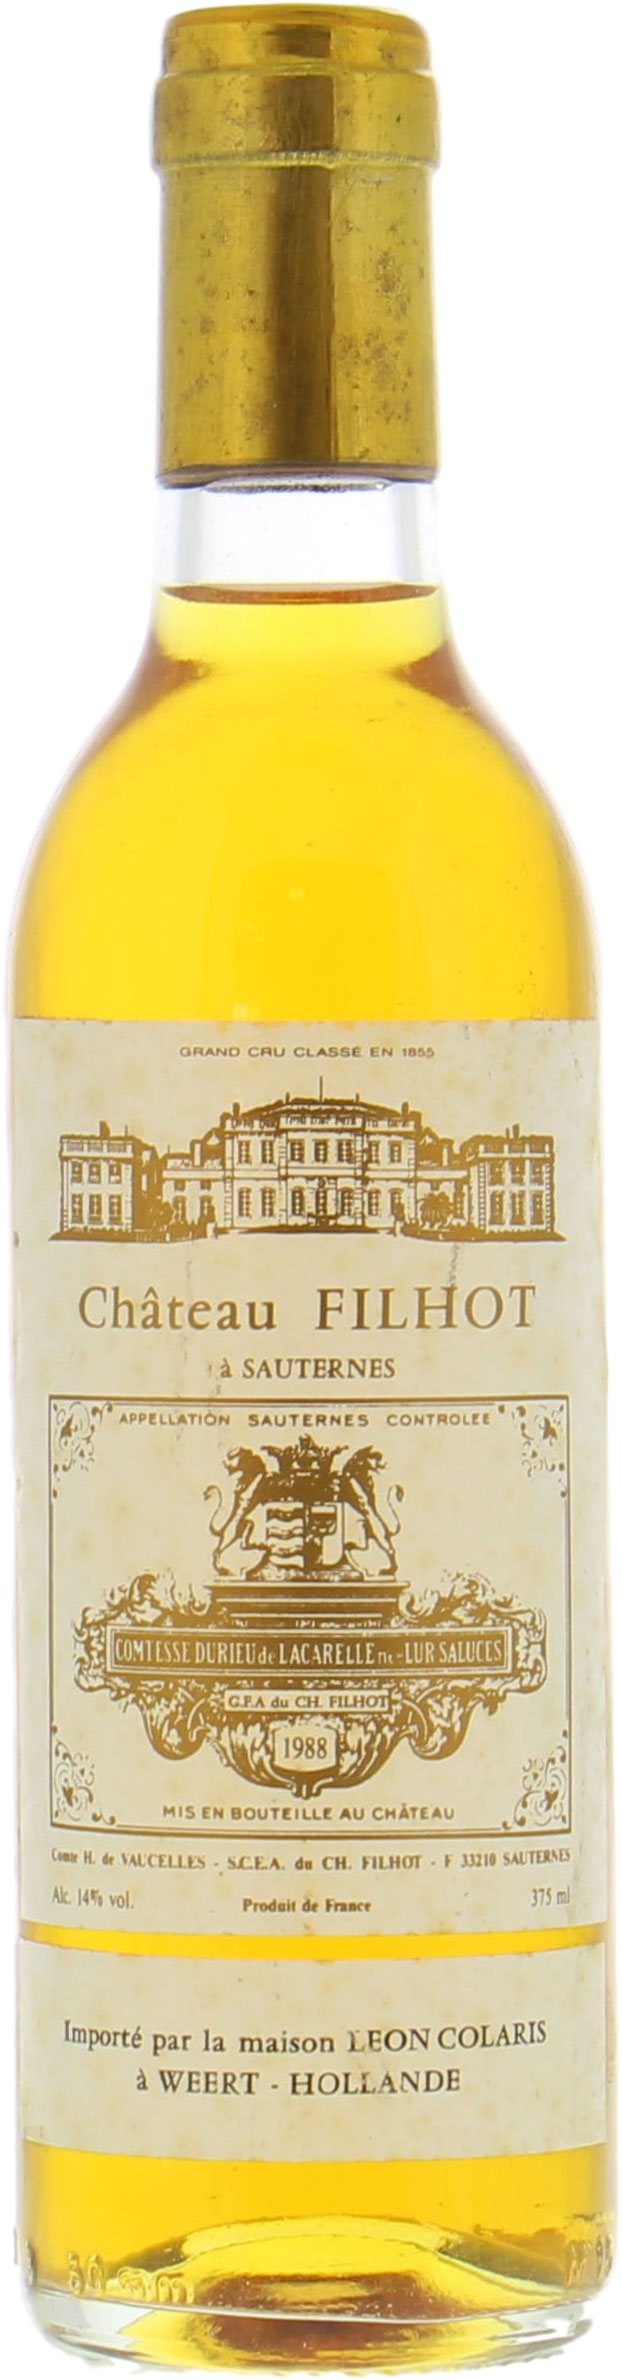 Chateau Filhot - Chateau Filhot 1988 Perfect